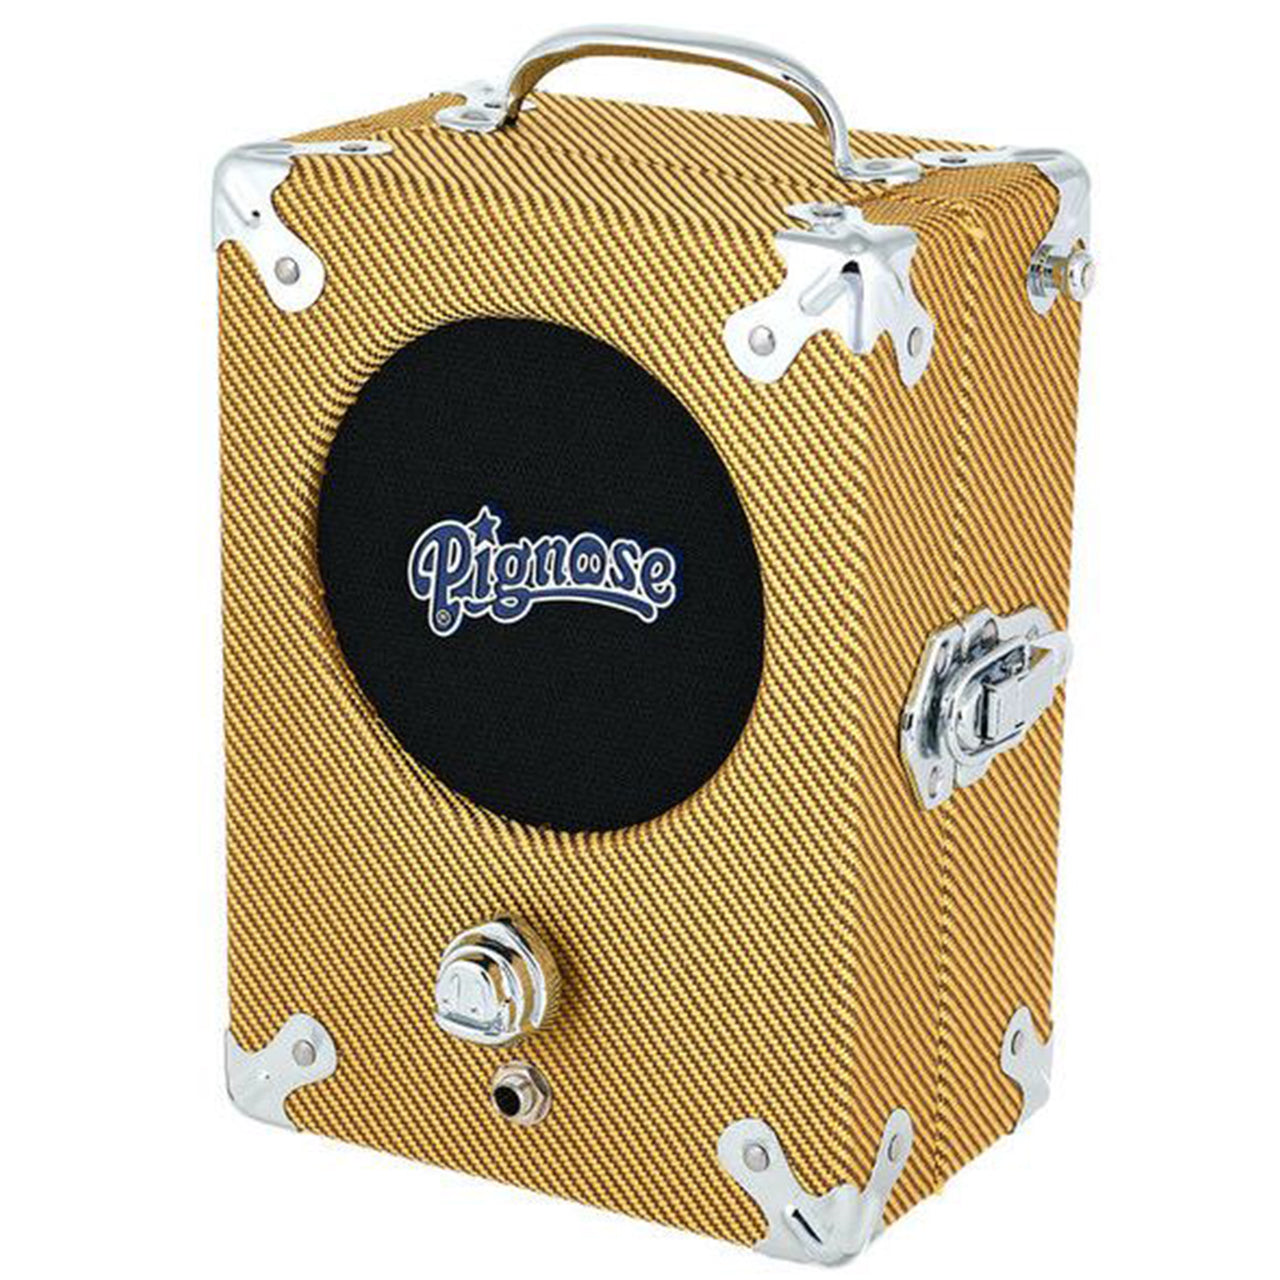 Pignose 7-100 Legendary Portable Amplifier, Tweed